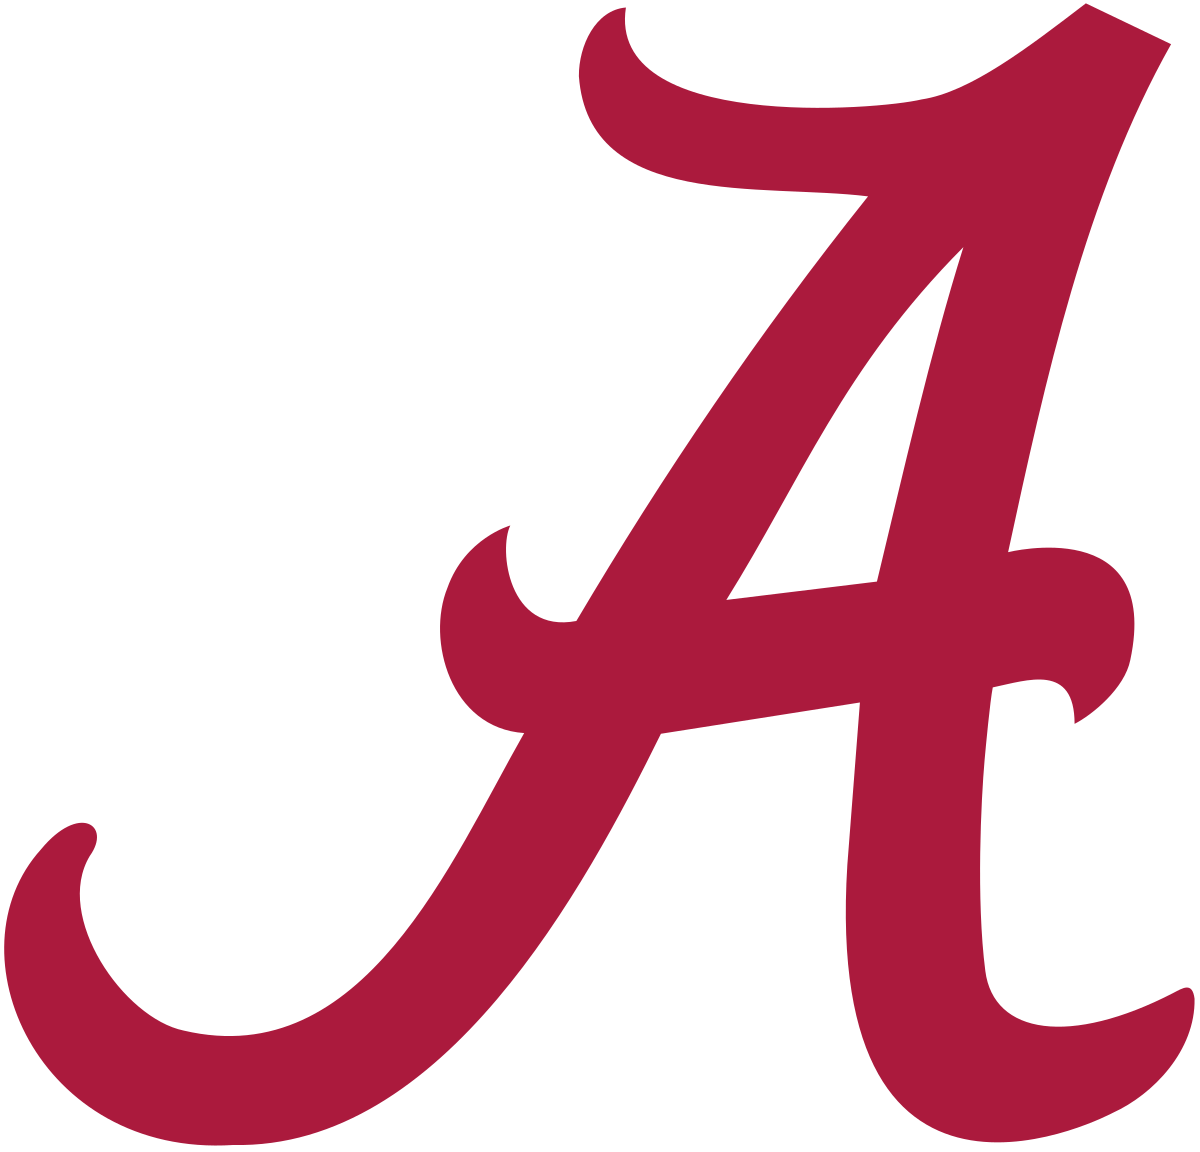 Alabama logo posted by Turf Tank